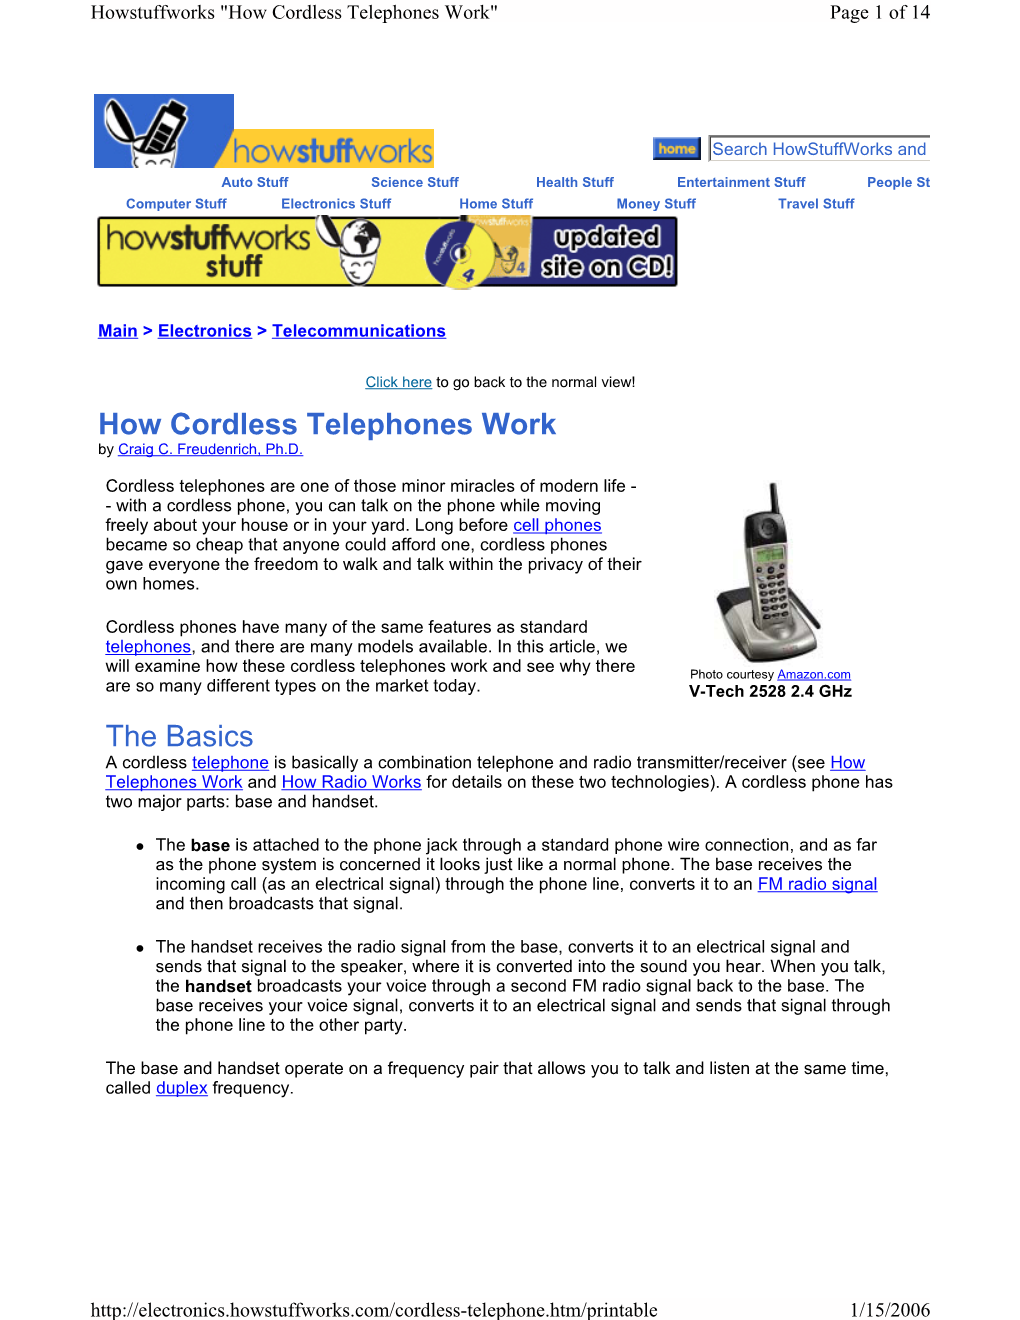 How Cordless Telephones Work the Basics